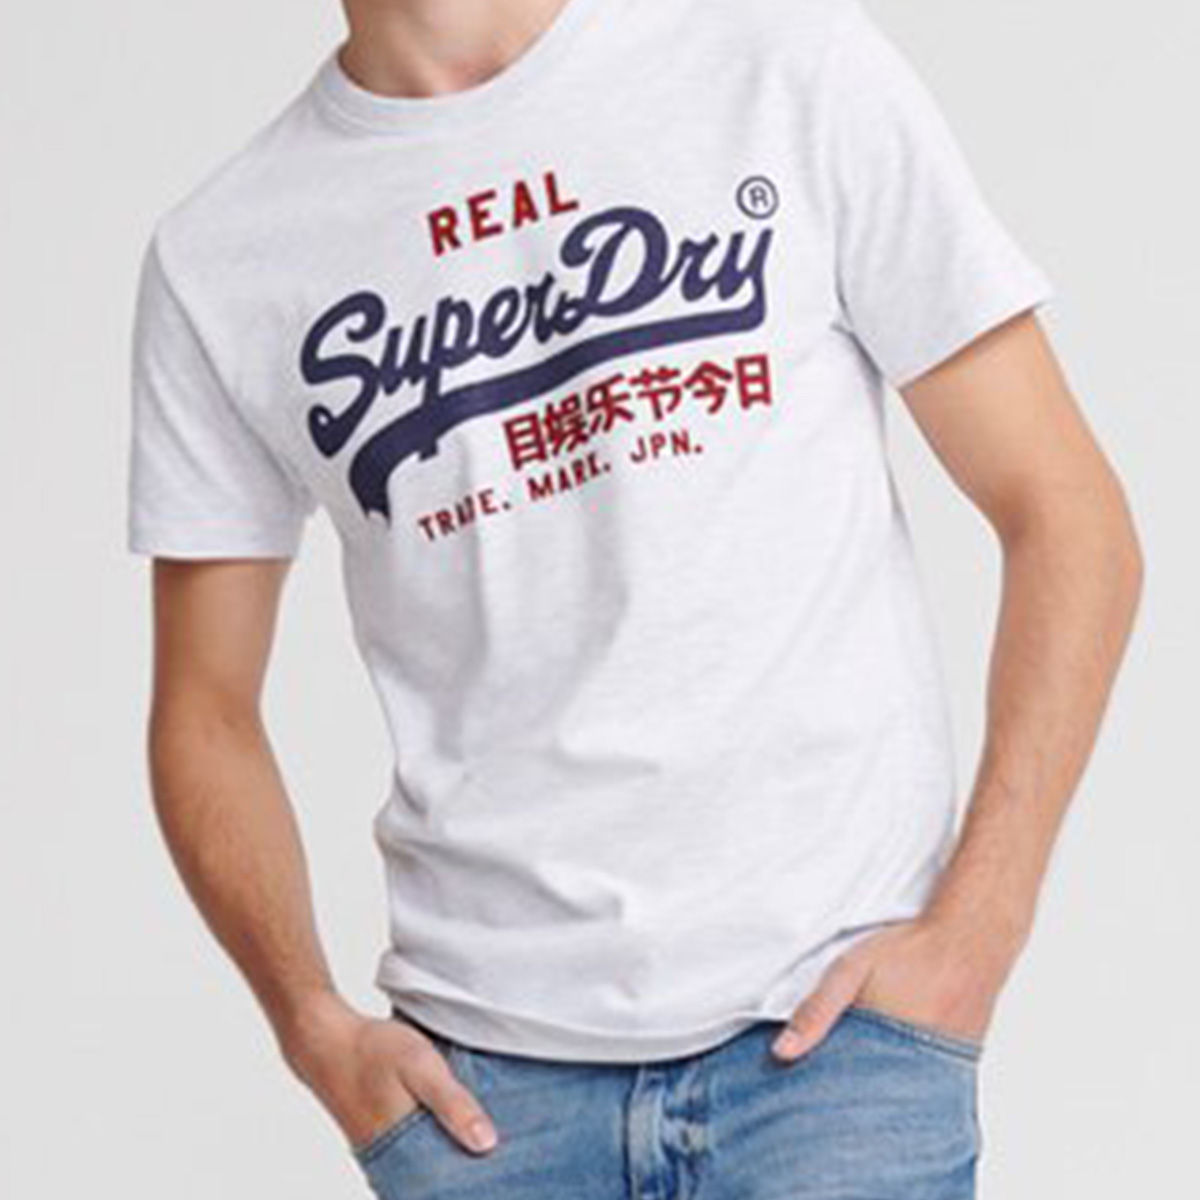 Superdry Herren VL Premium Goods Heat Sealed T-Shirt Short Sleeve M1000107A Grau